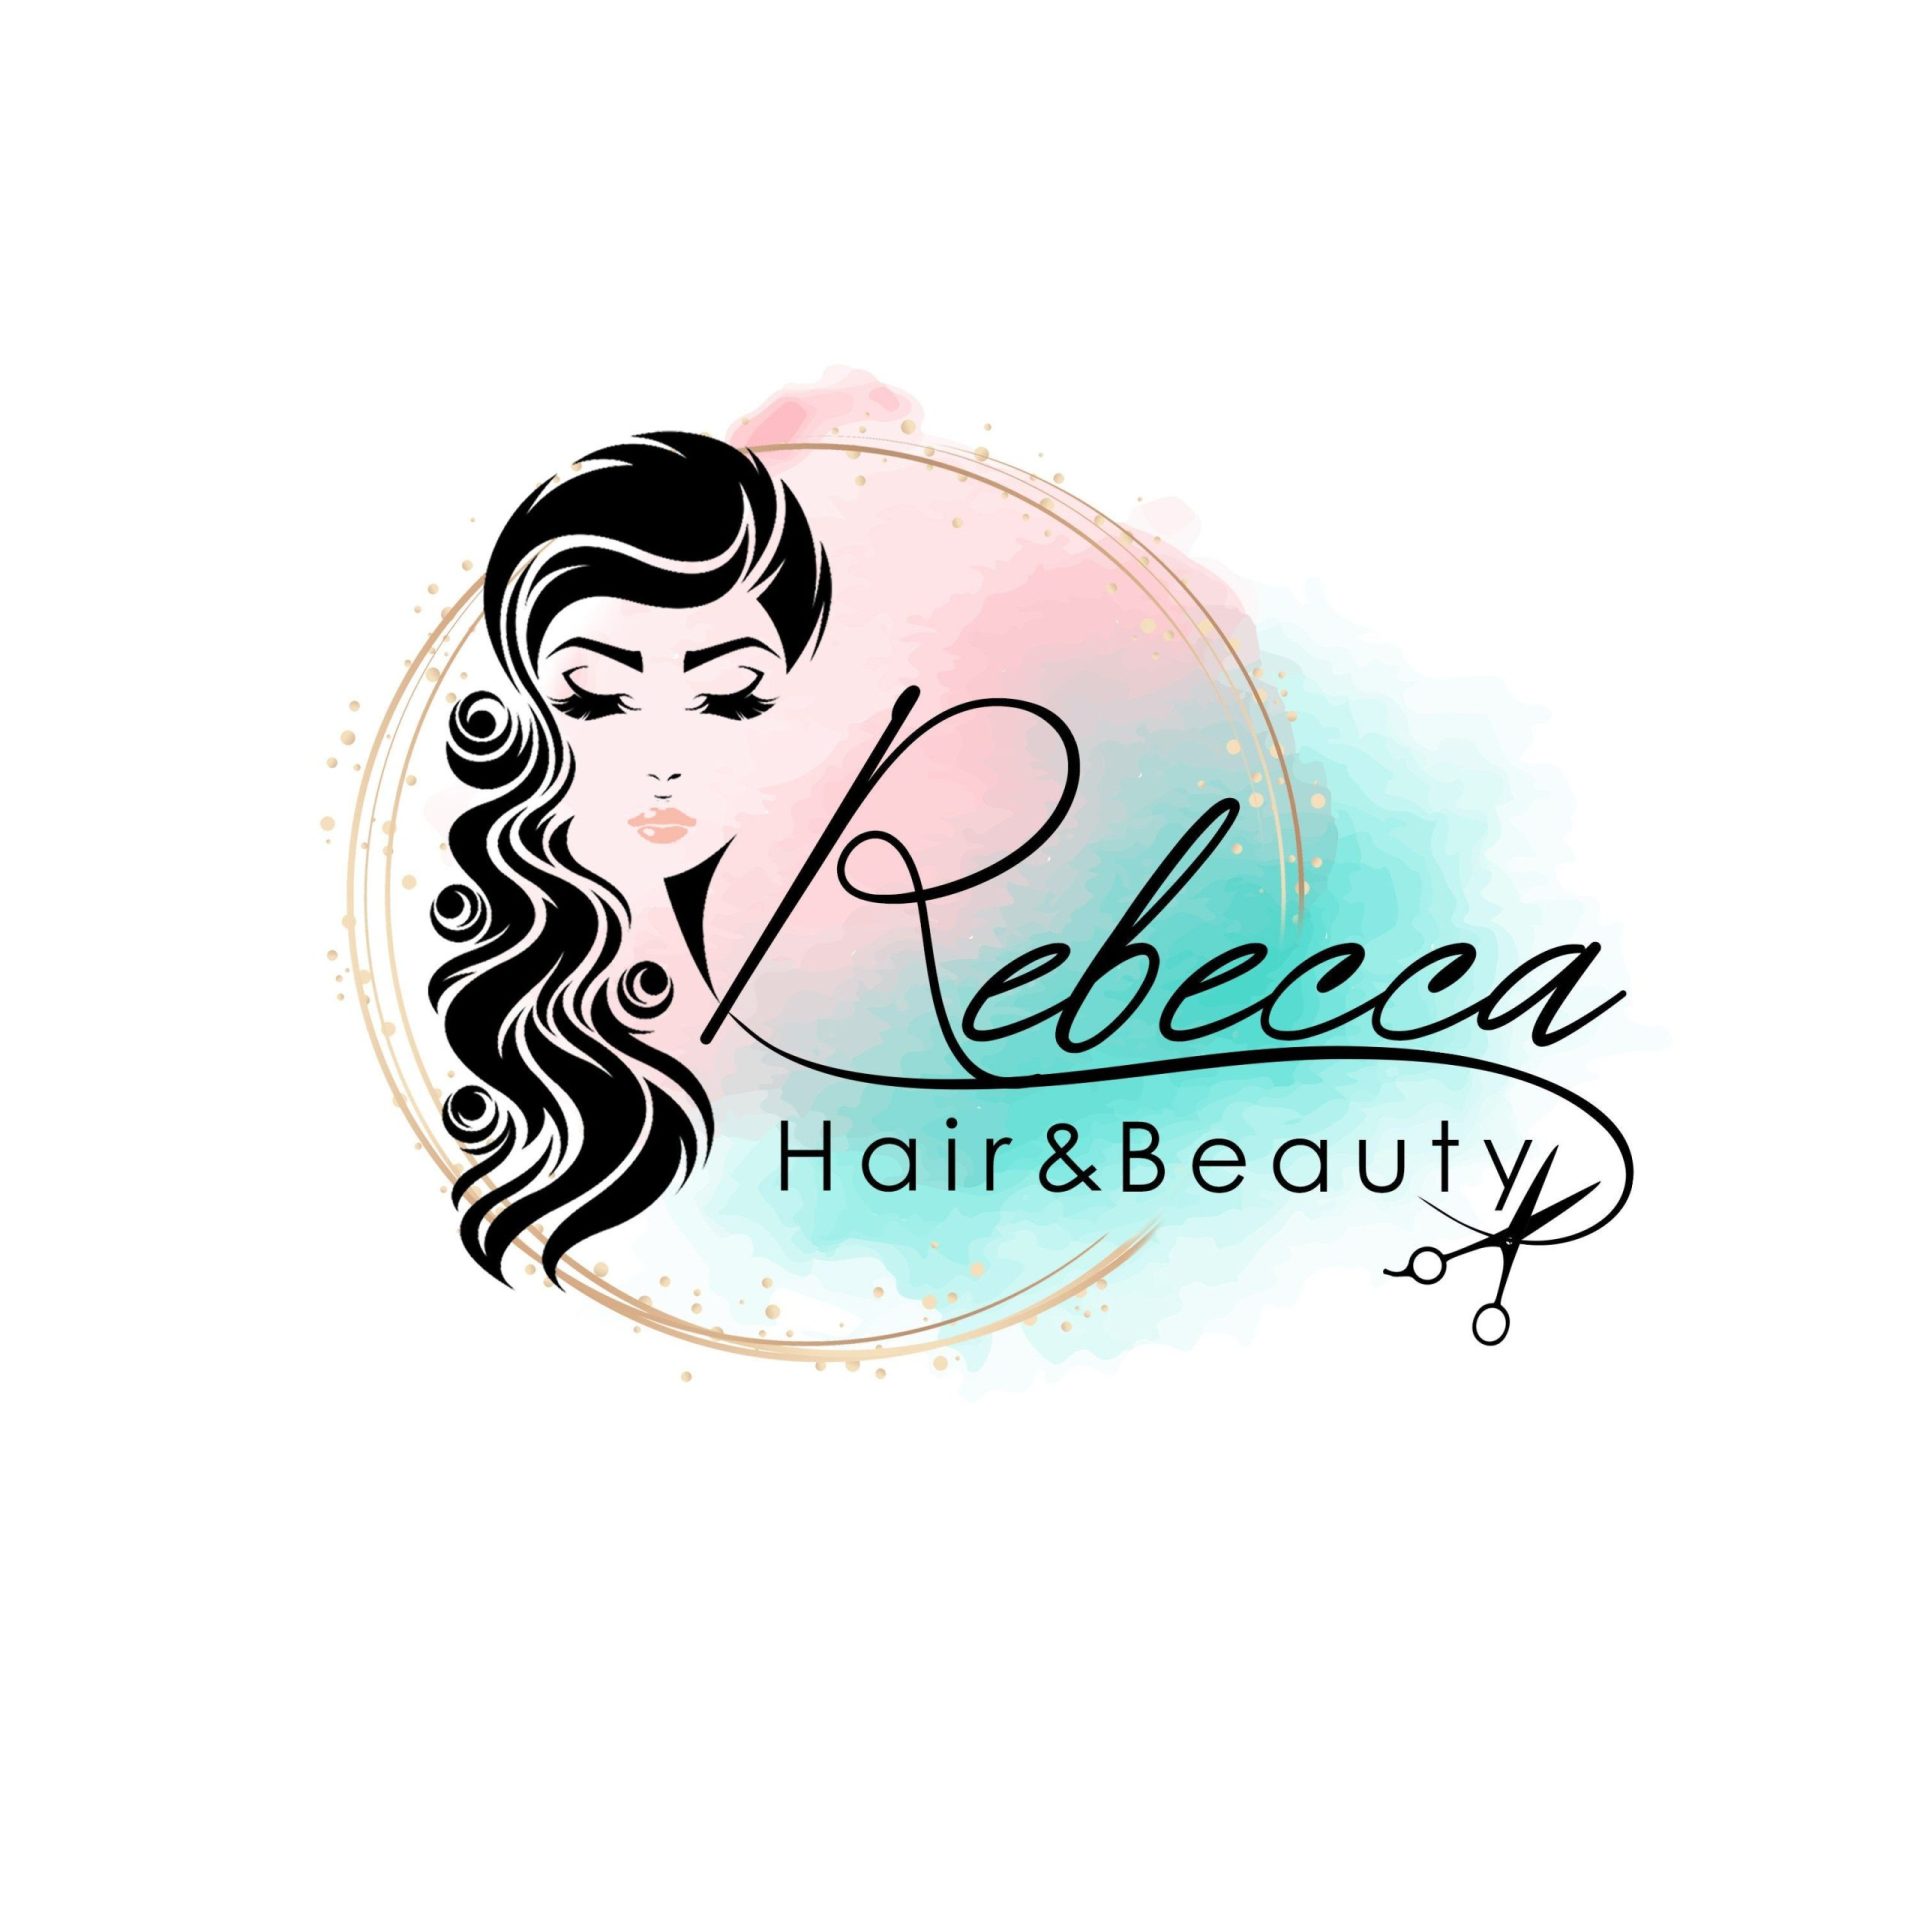 hairstylist logo ideas 2